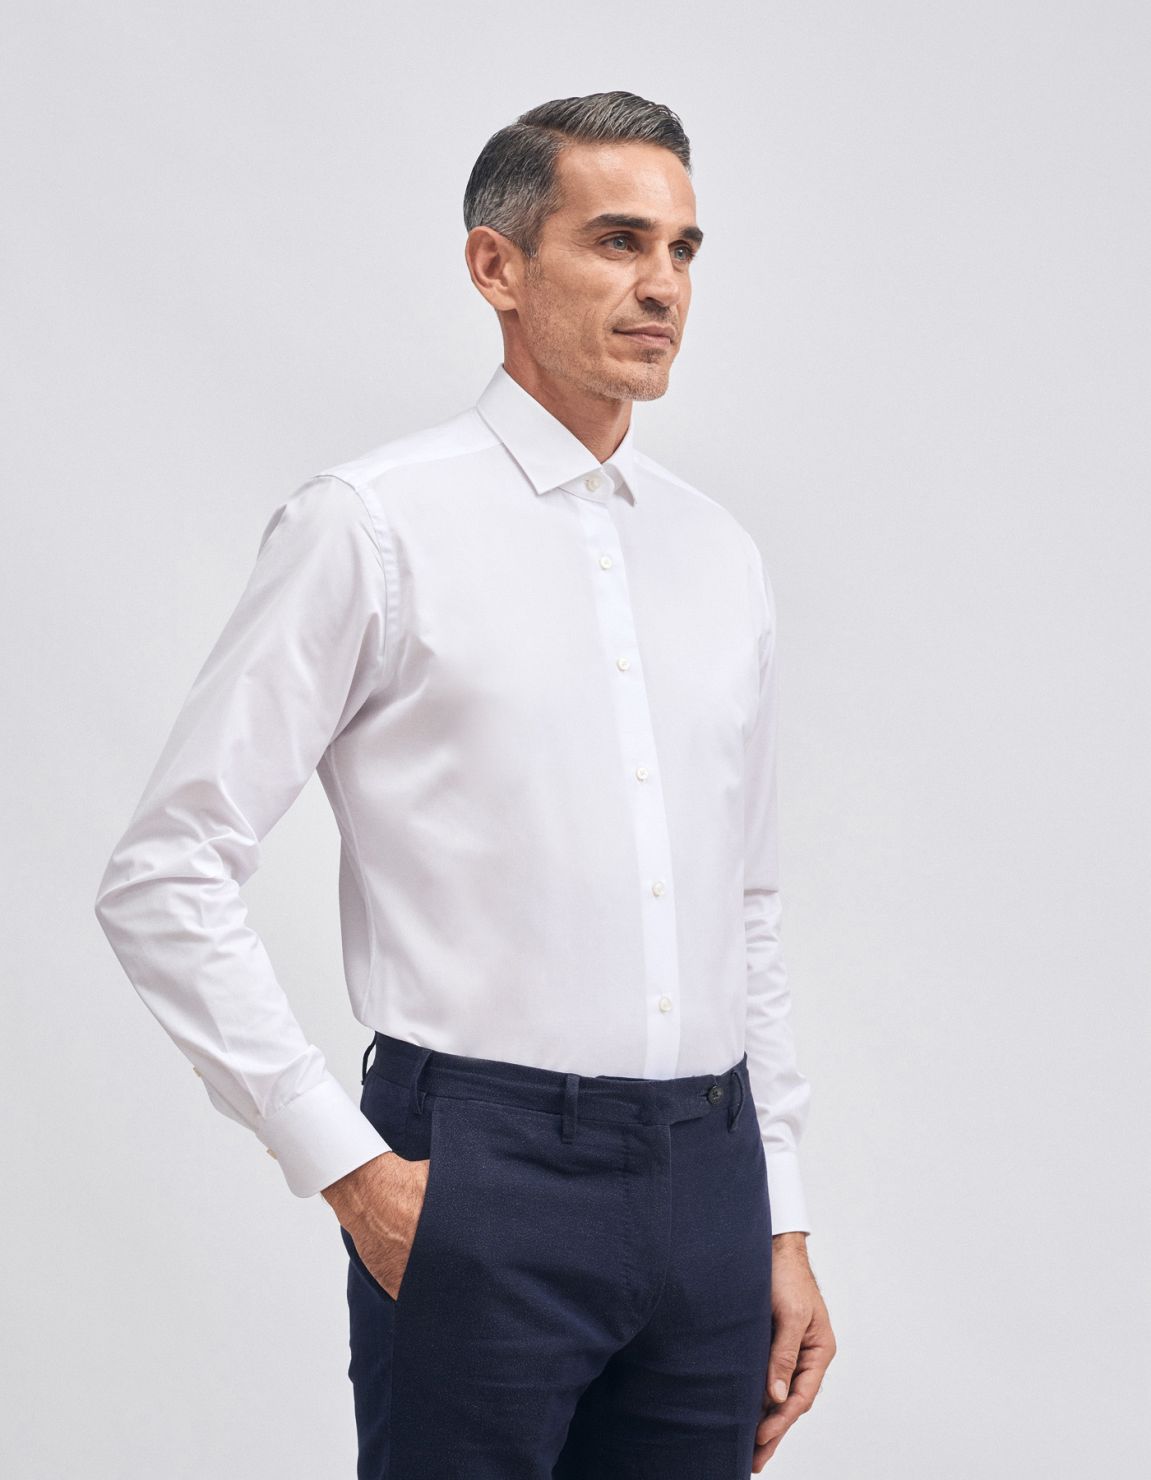 Shirt Collar small cutaway White Twill Tailor Custom Fit 1